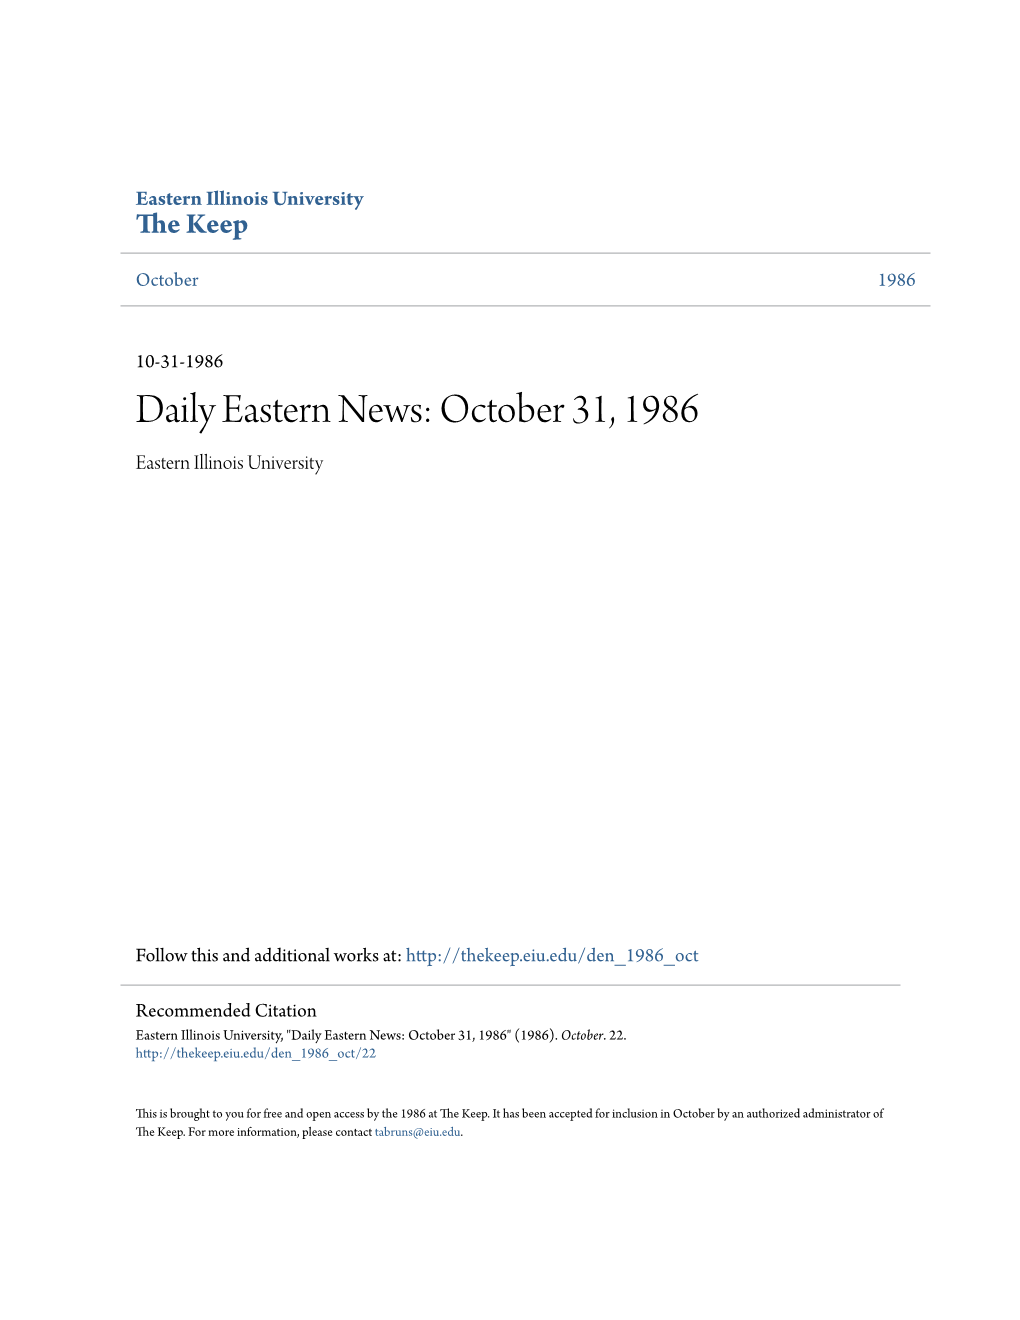 Daily Eastern News: October 31, 1986 Eastern Illinois University